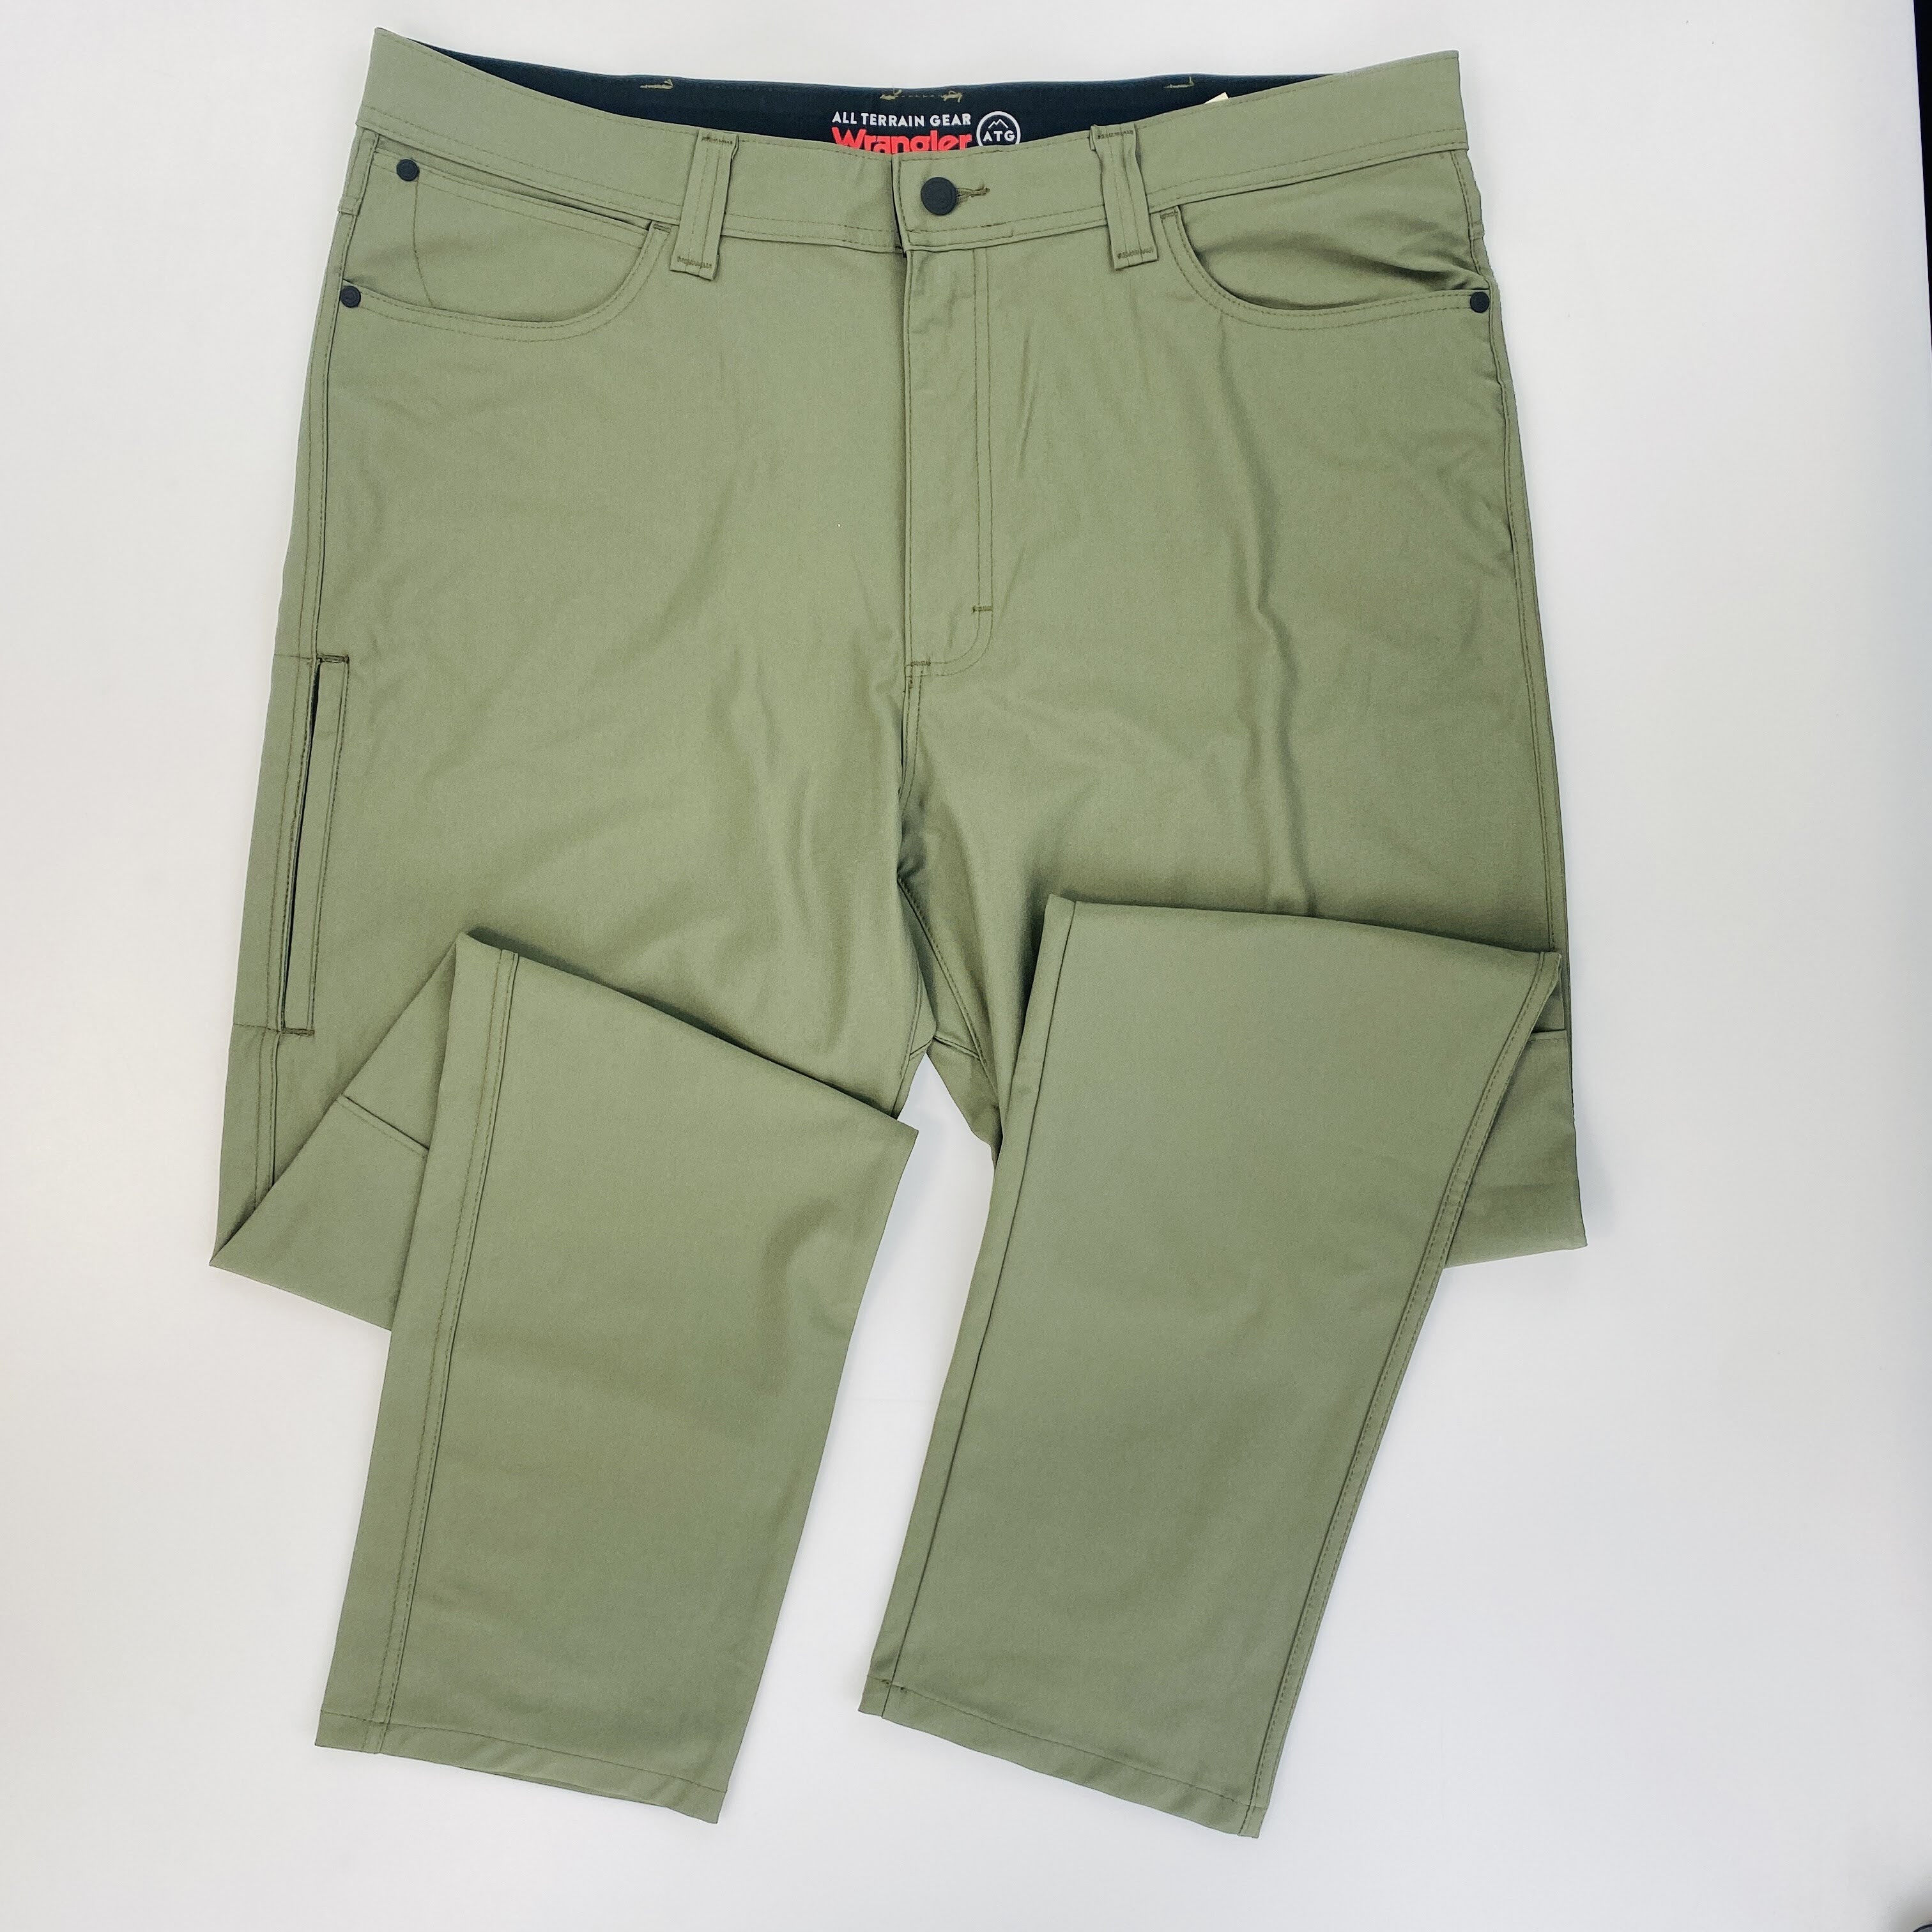 Wrangler Fwds 5 Pocket Pant - Pantaloni da escursionismo di seconda mano - Uomo - Kaki - 52 | Hardloop